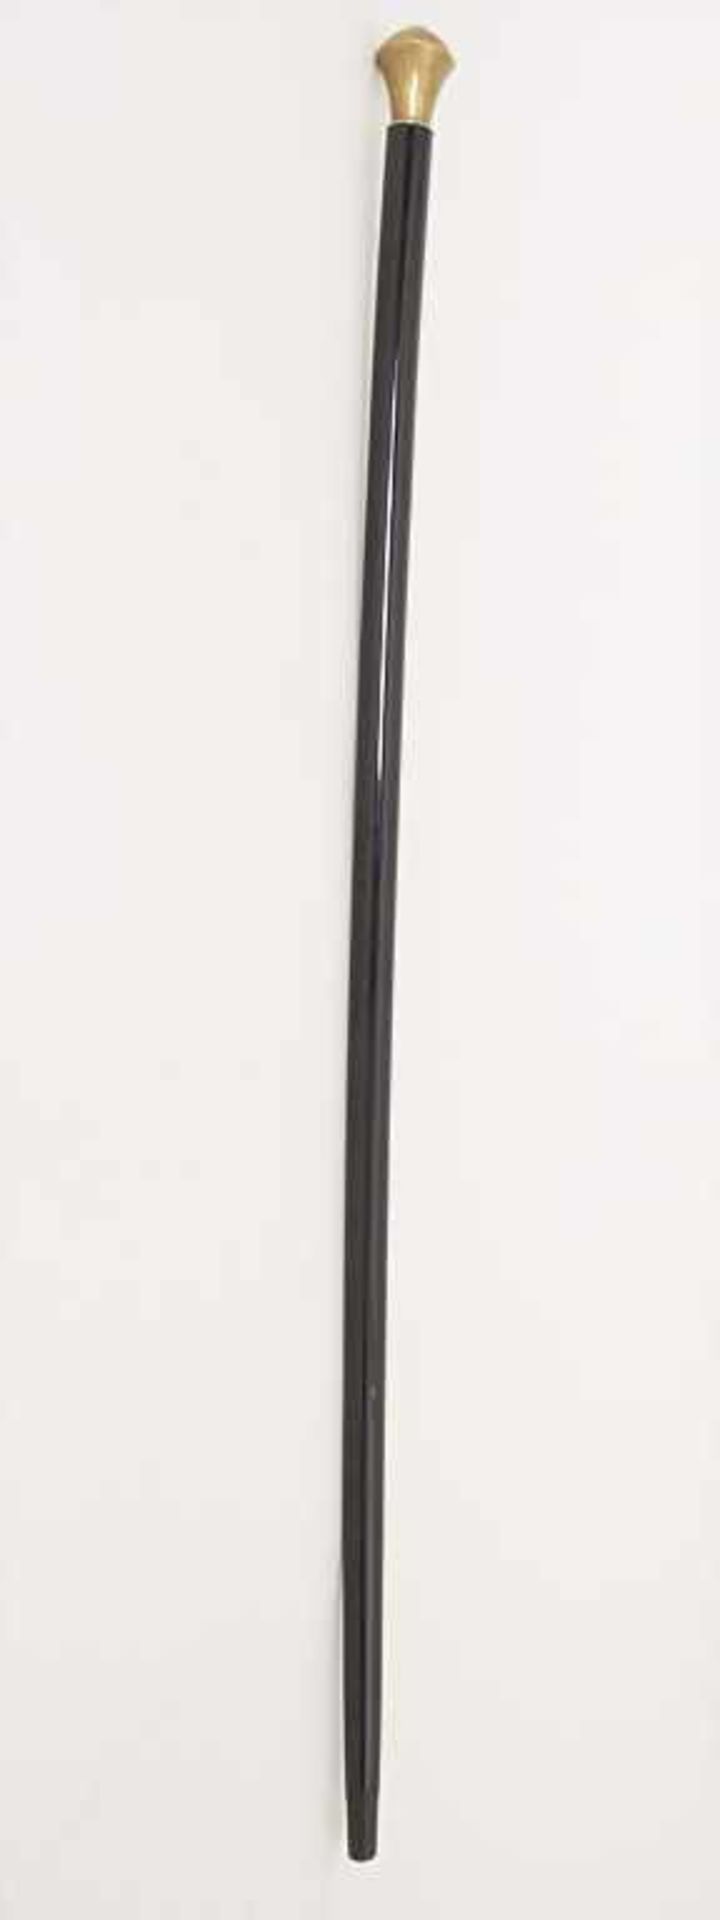 Gehstock mit Messingknauf / A cane with brass knob, um 1900Material: Ebenholz, Messingknauf, - Bild 2 aus 2